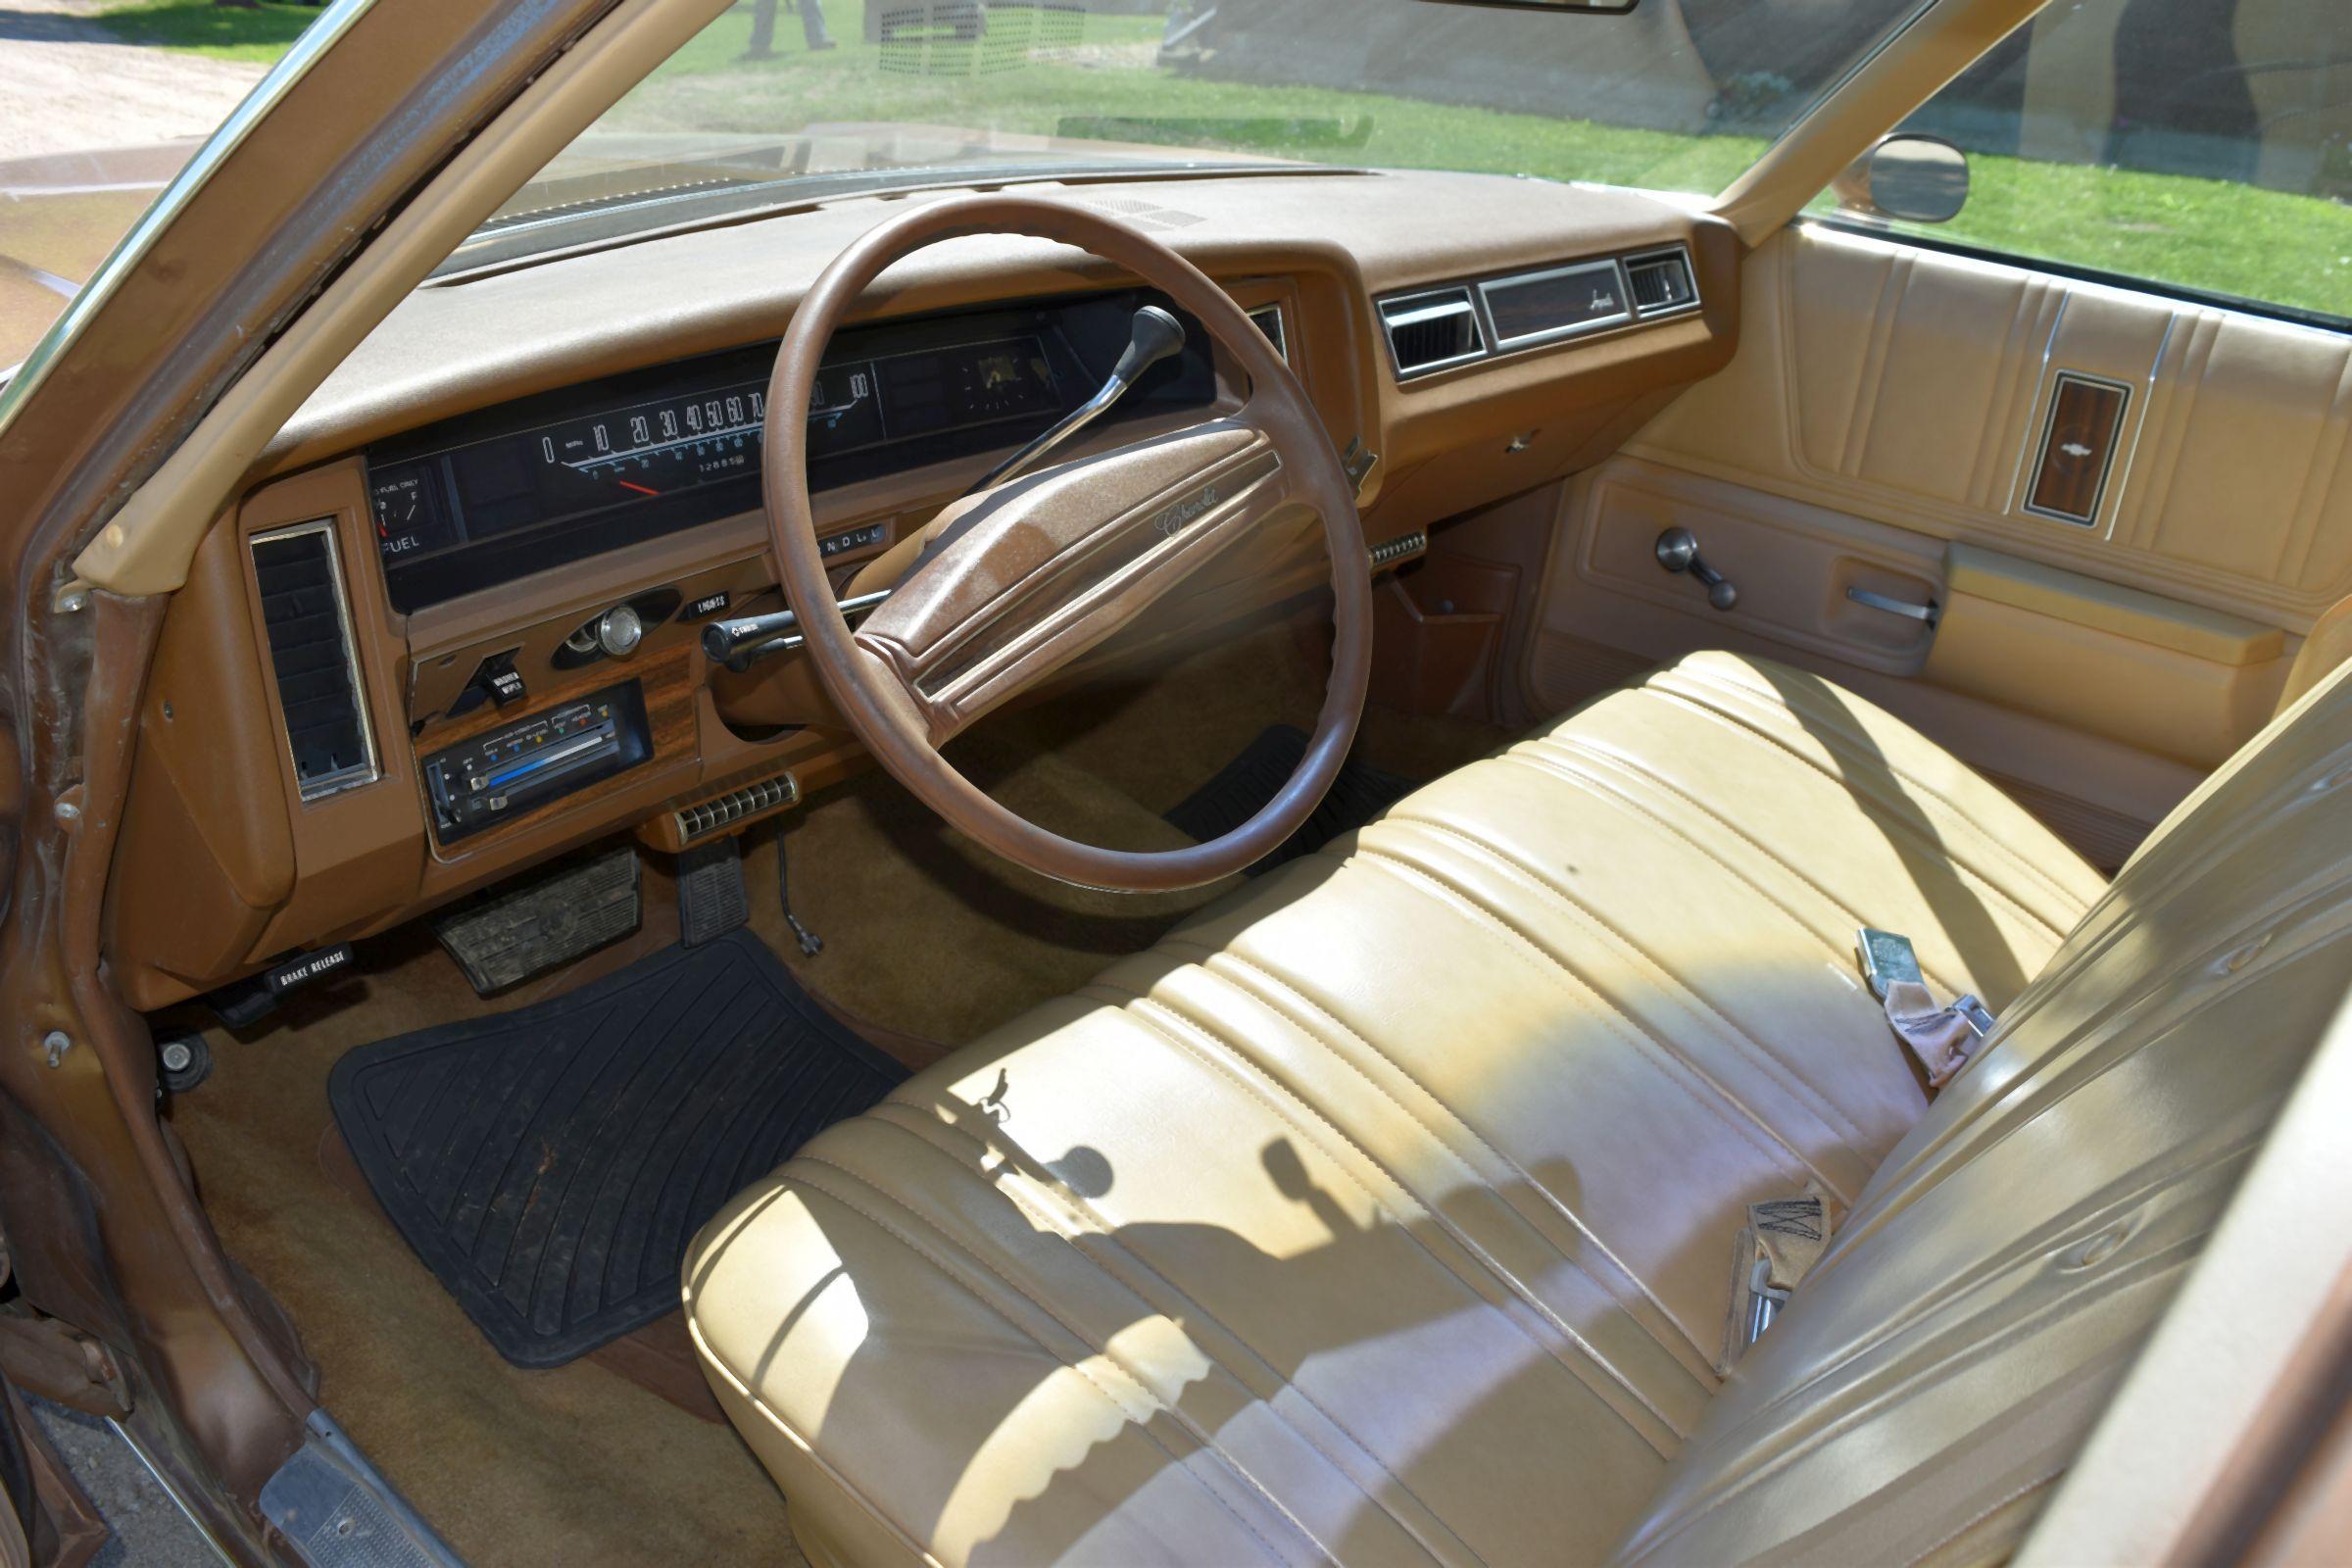 1976 Chevrolet Impala Wagon 4 Door Car, 82,885 Miles, Original Miles, 400ci Engine, Auto Transmissio